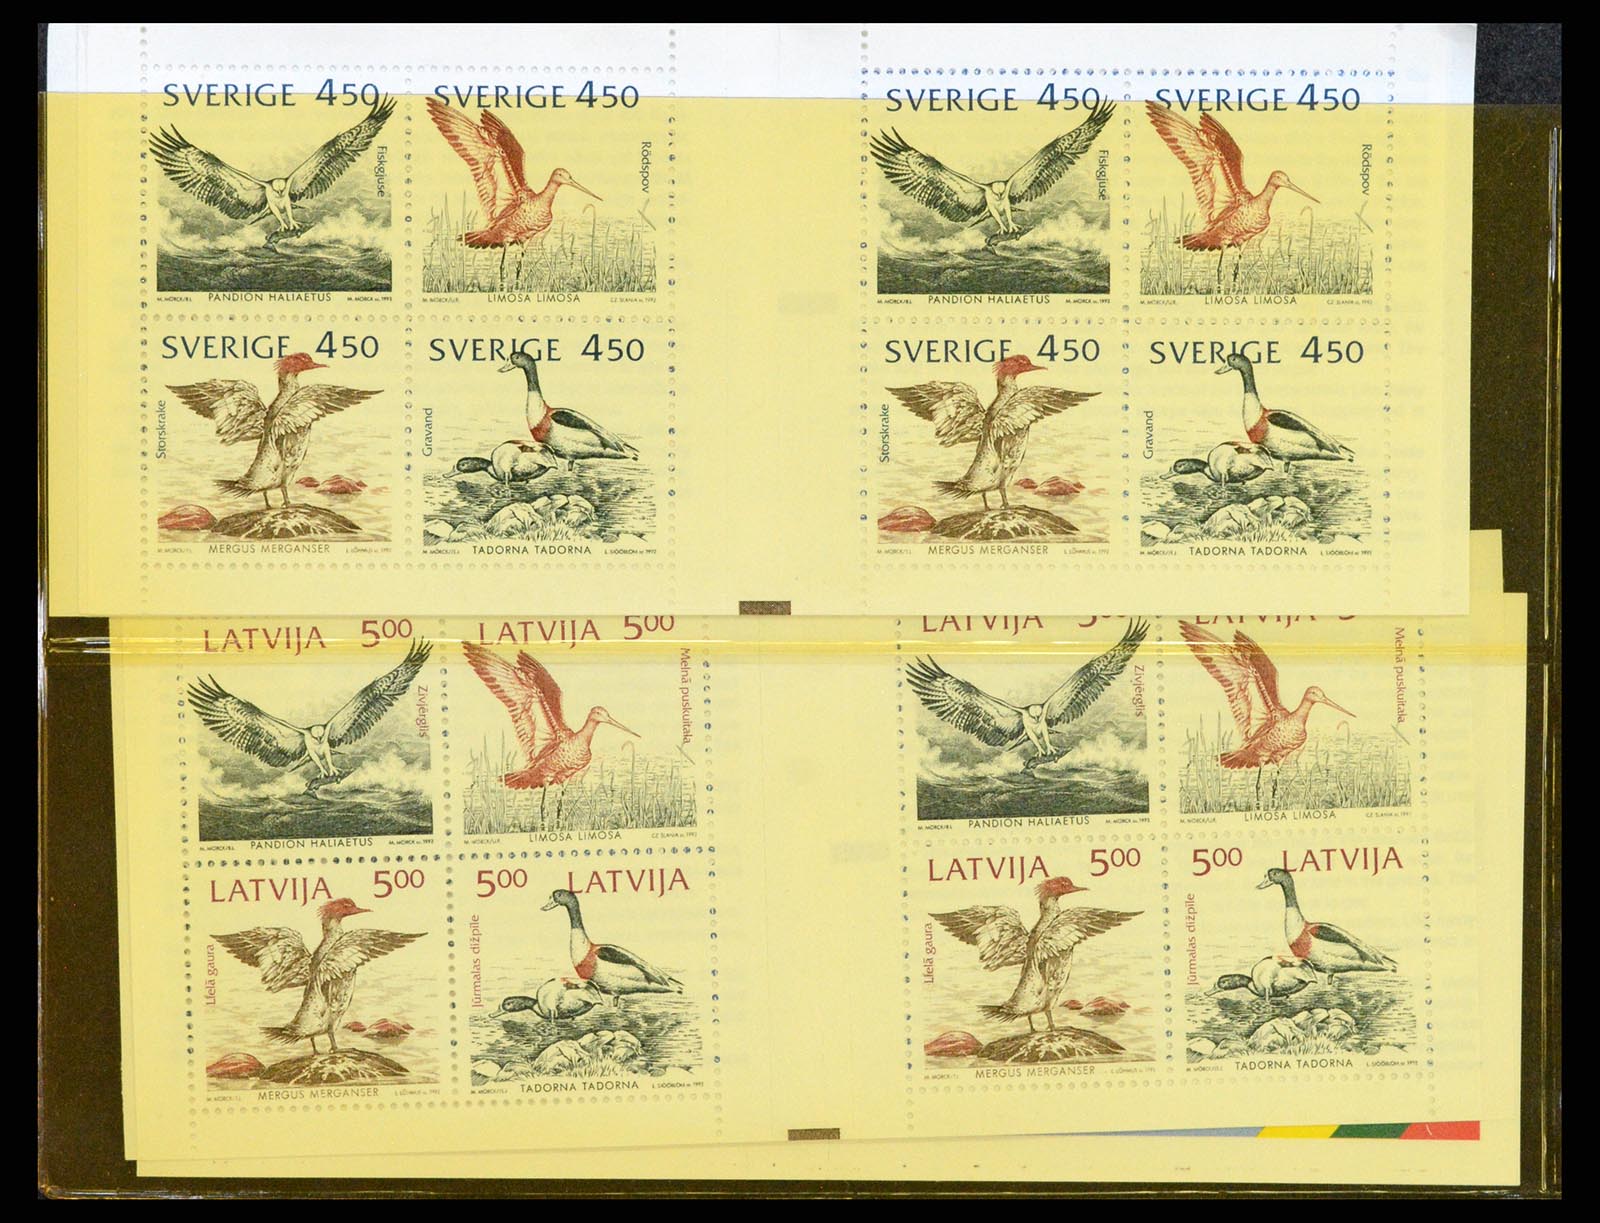 37341 012 - Stamp collection 37341 Sweden stamp booklets.